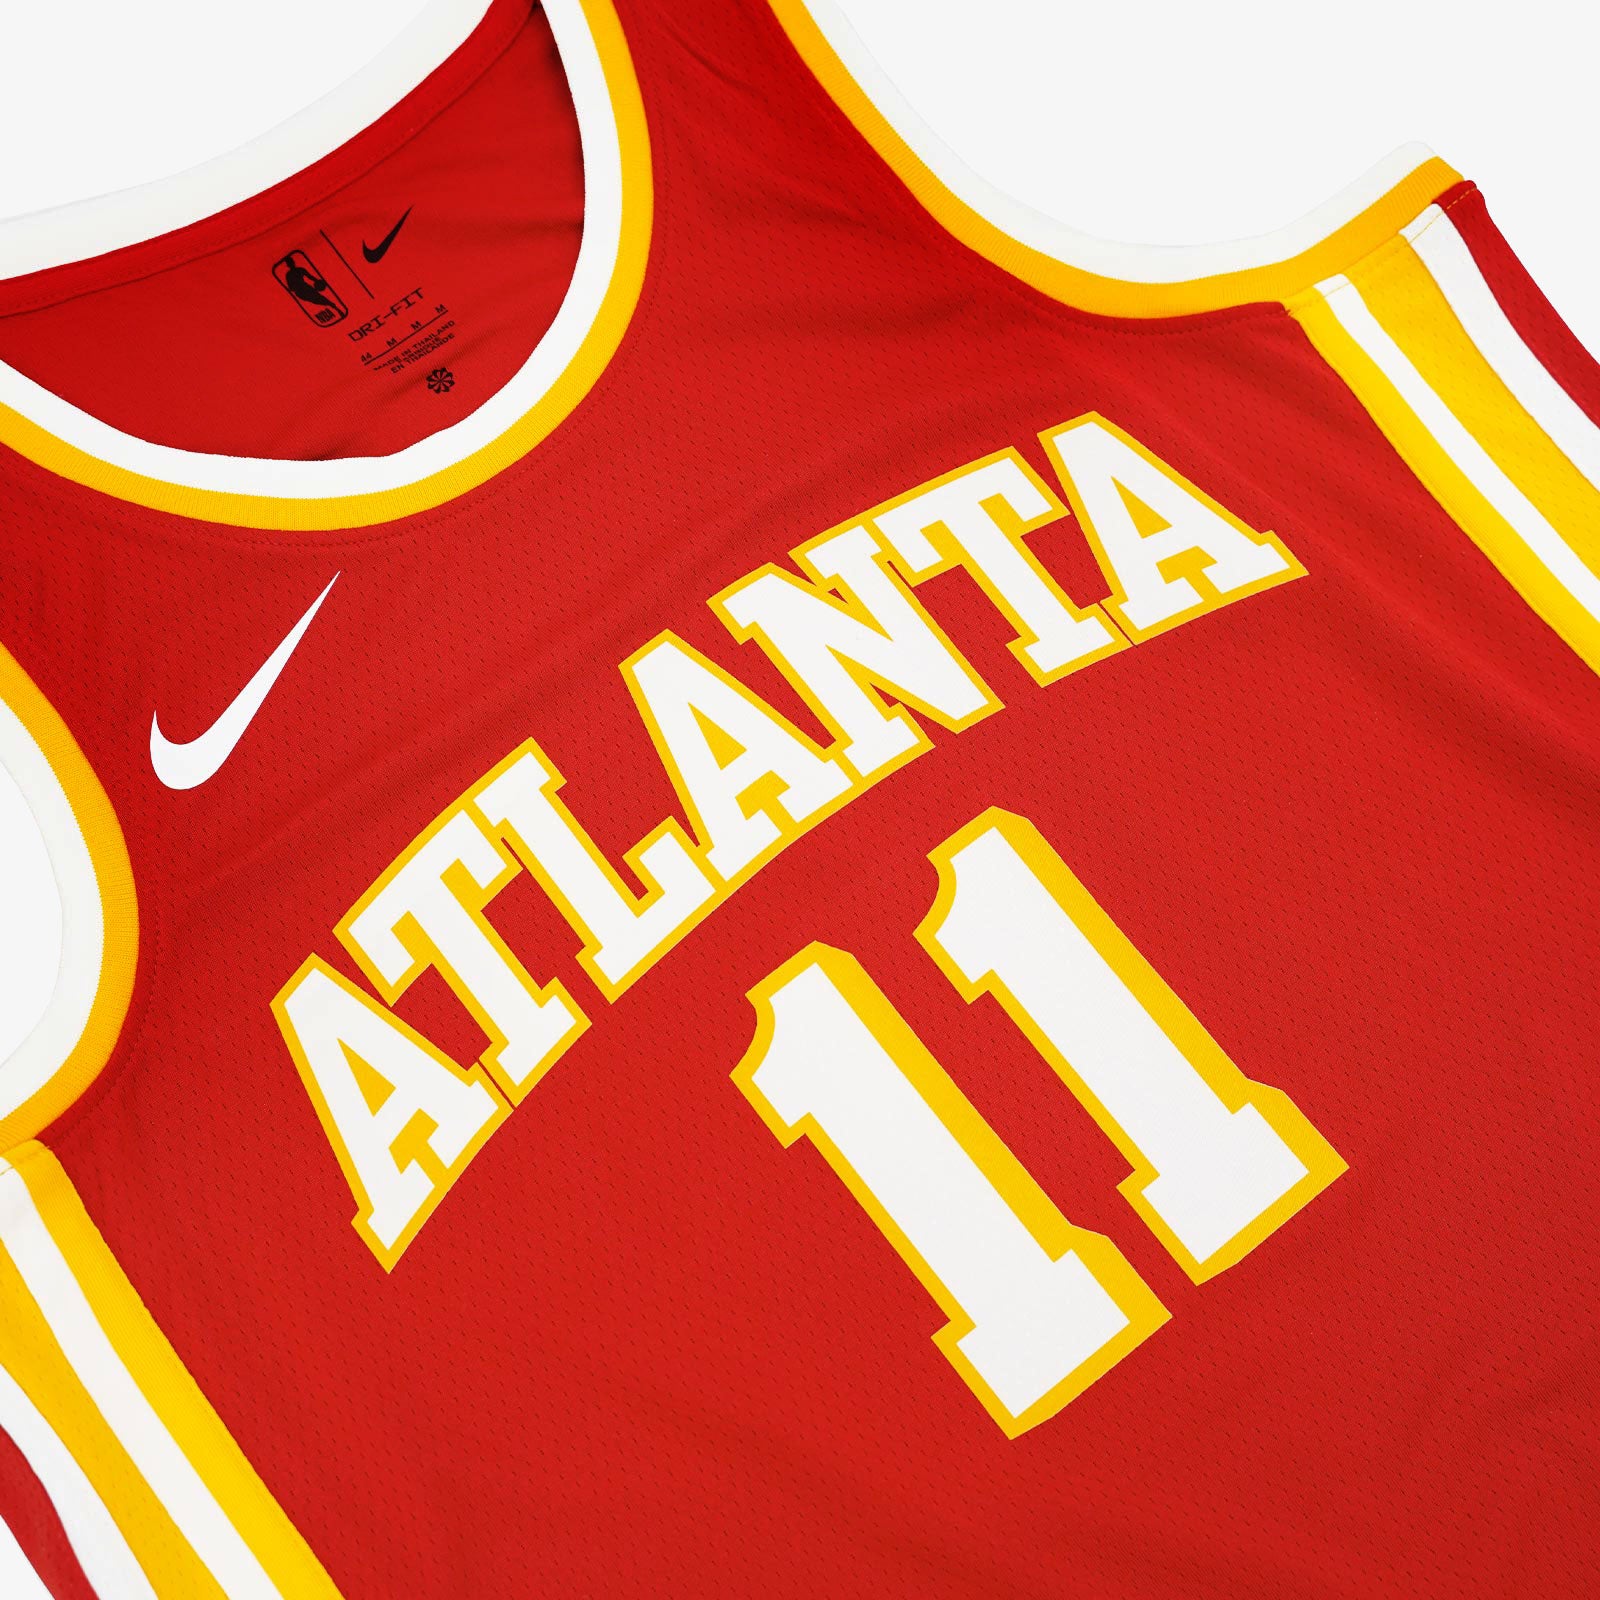 Nike Men's Trae Young Atlanta Hawks 2022 City Edition Swingman Jersey, Black, Size: XS, Polyester